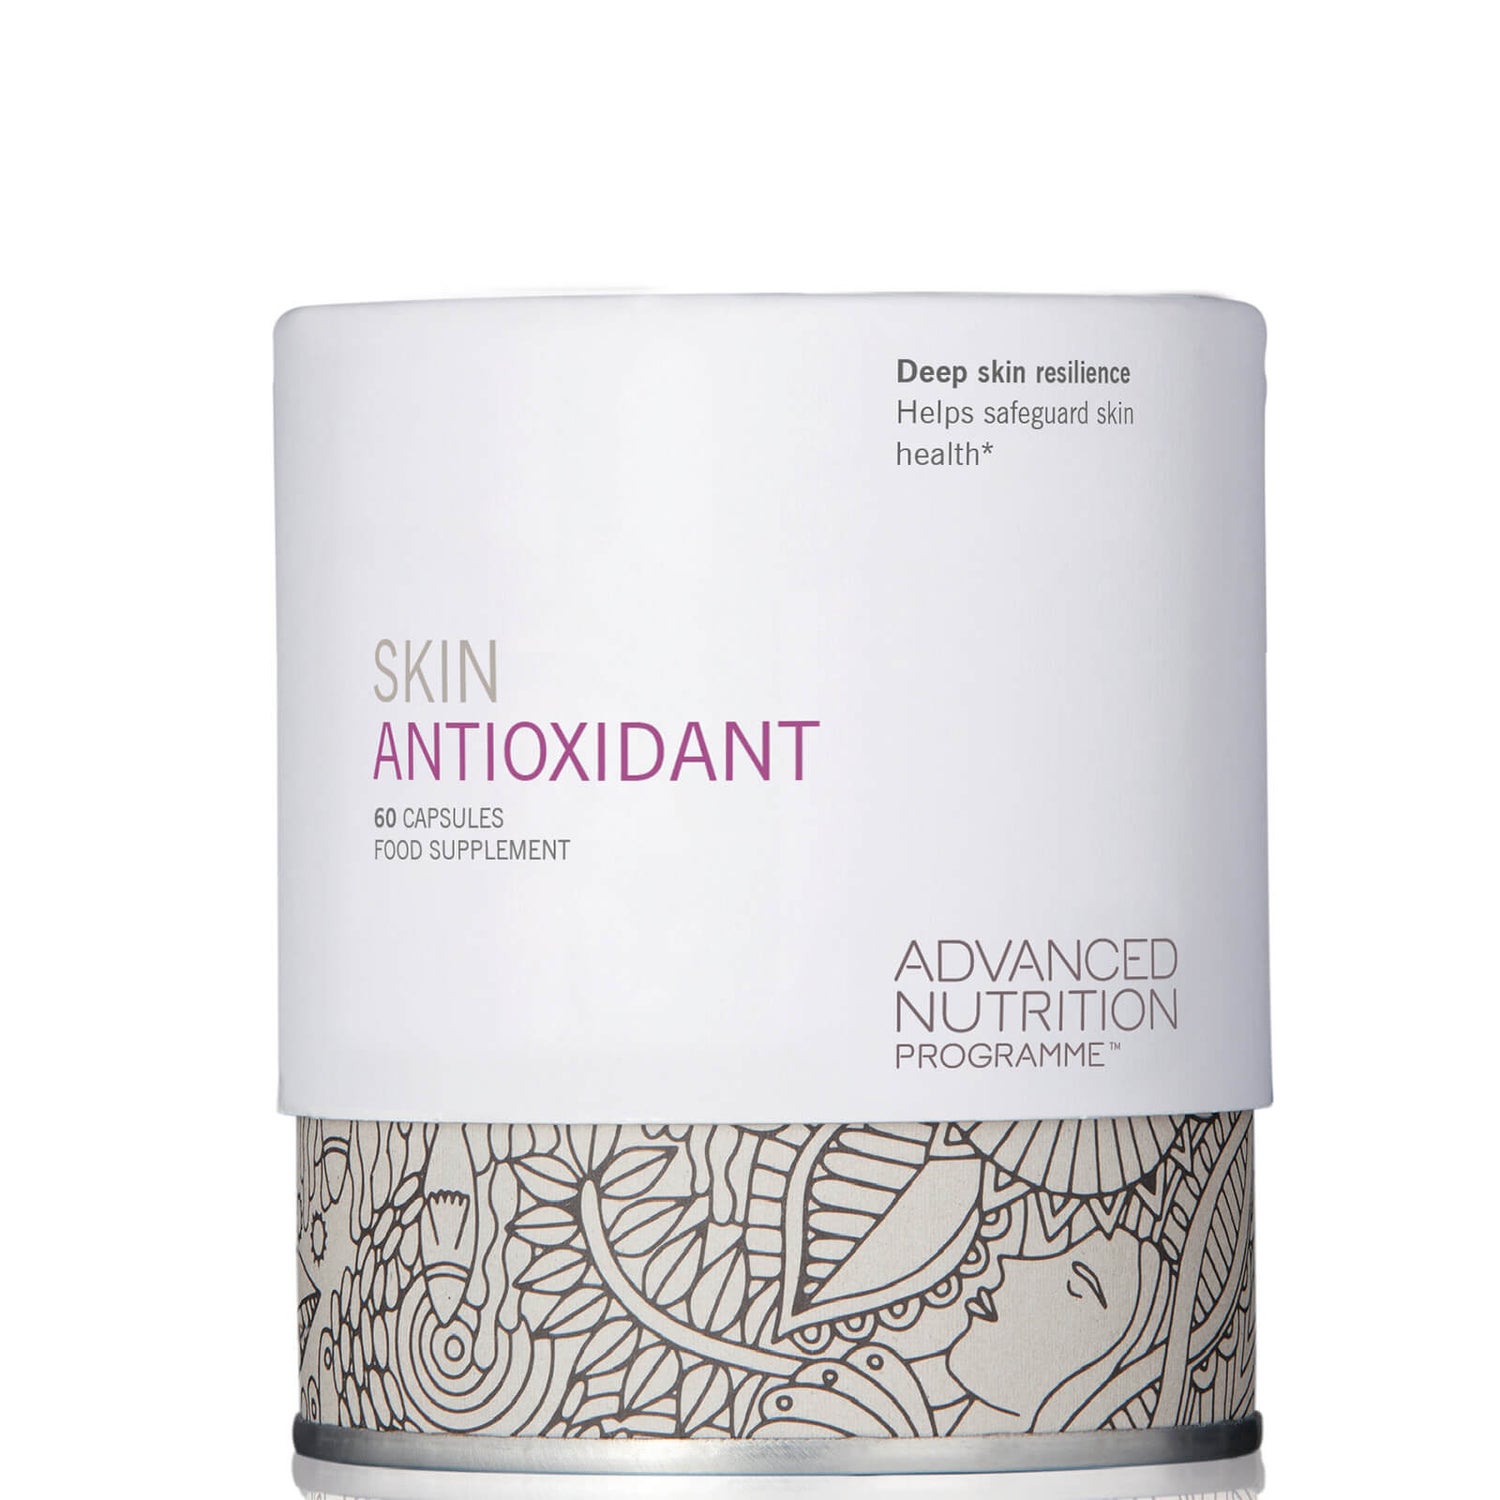 Advanced Nutrition Programme™ Skin Antioxidant 60 Capsules